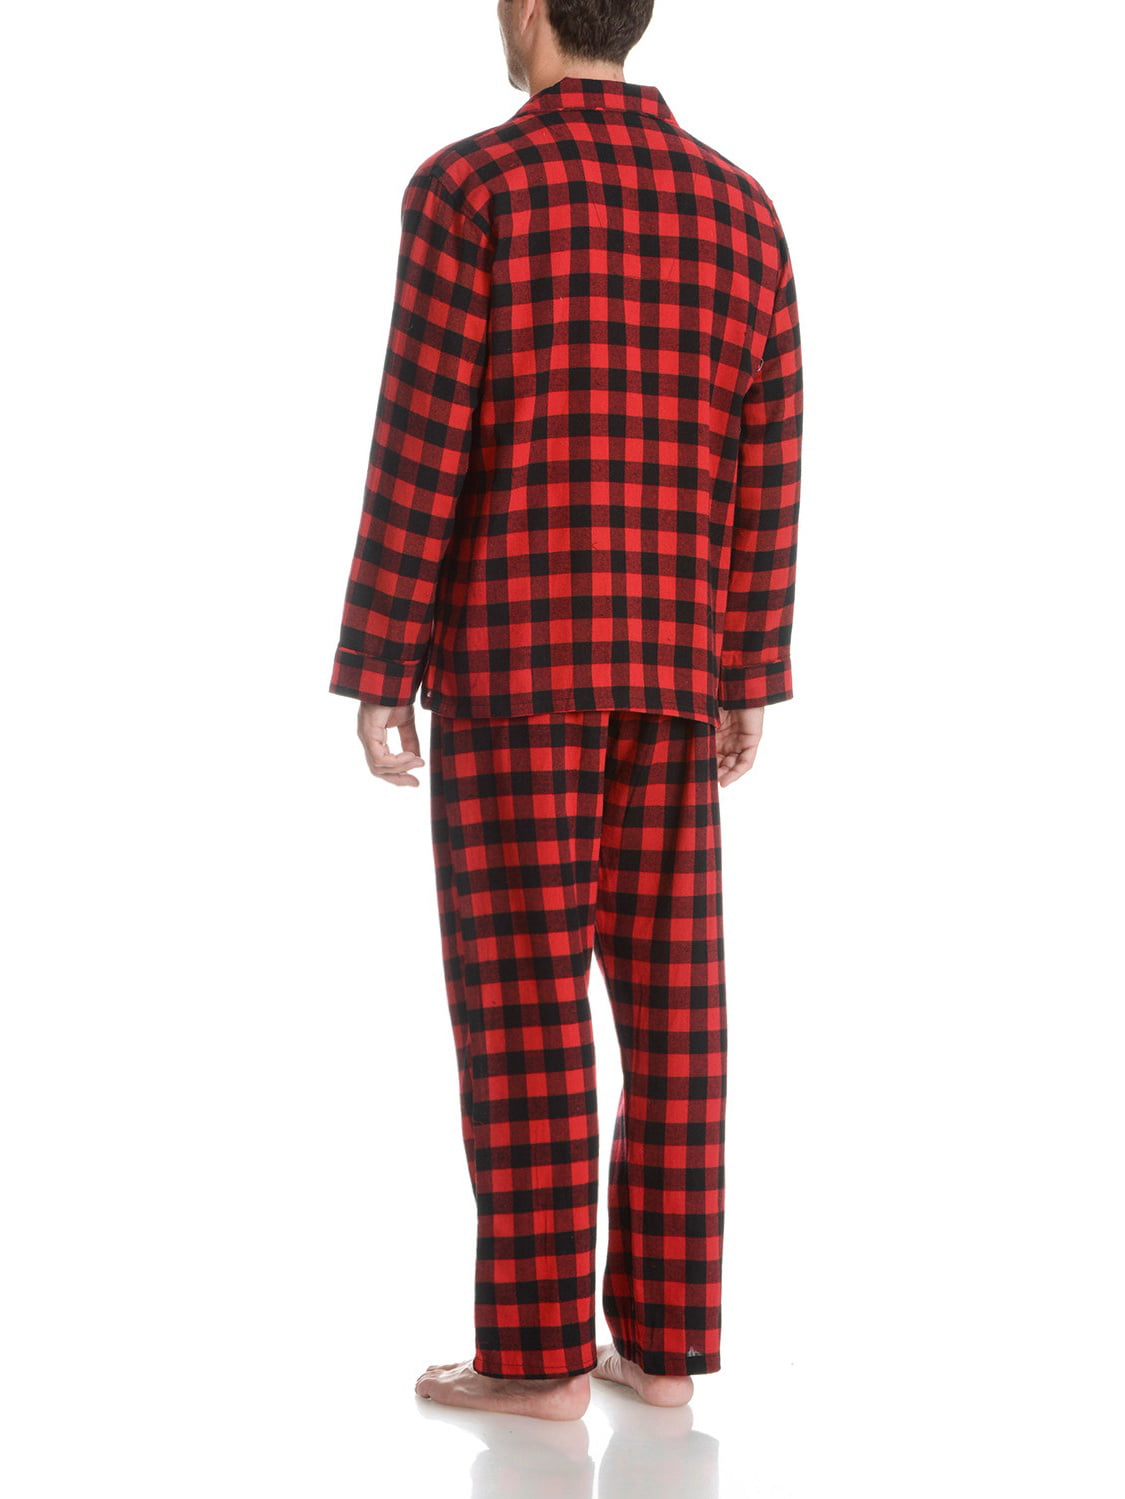 Family Pajamas Matching Men's Stewart Plaid Family Pajama Set, Created for  Macy's - Macy's